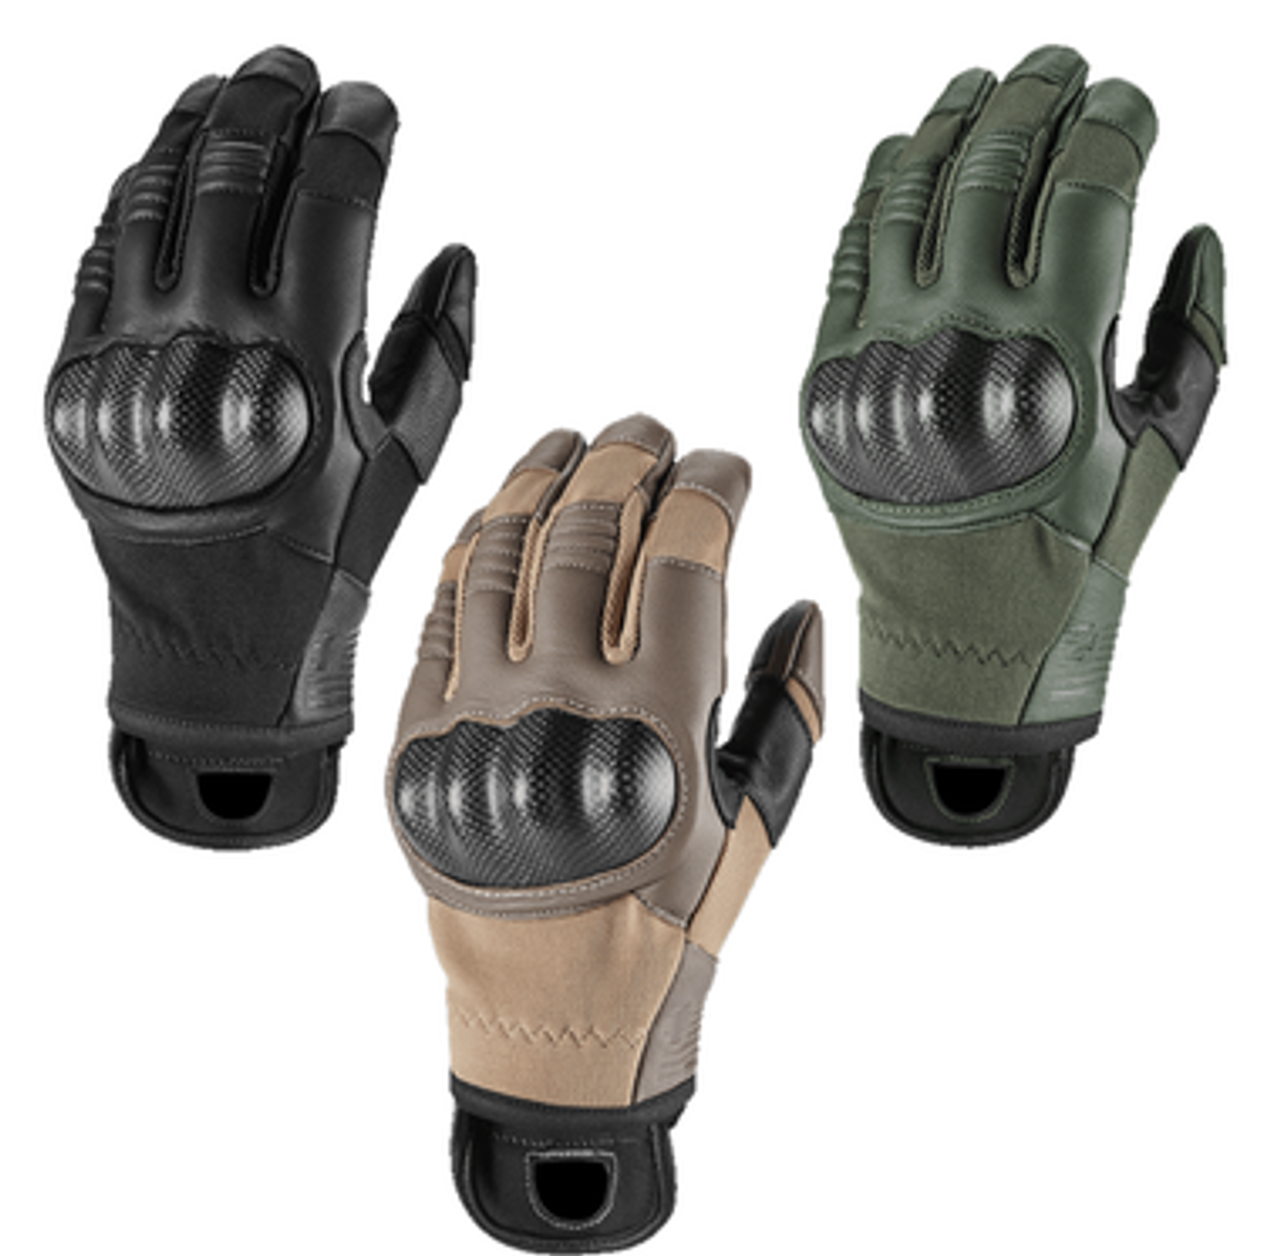 Viper Tactical Elite Gloves at Military 1st – ArniesAirsoft News